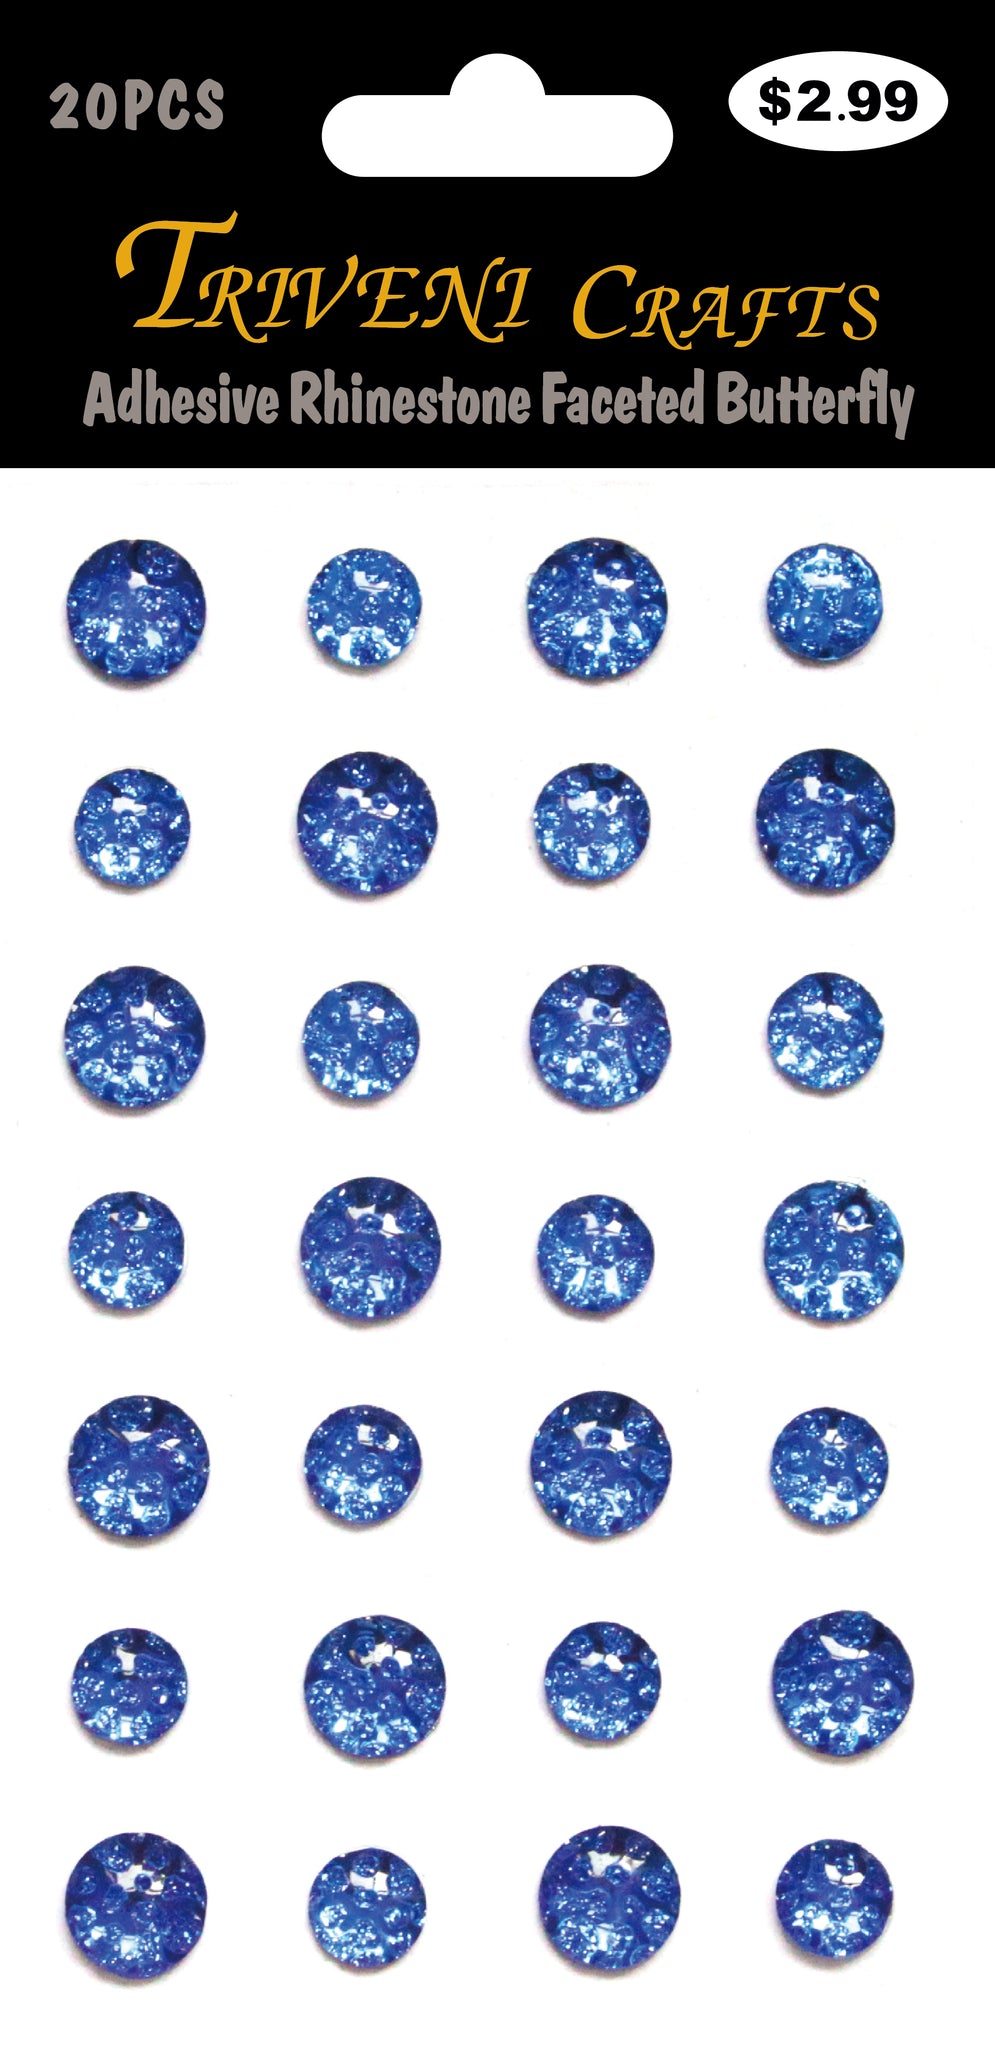 Adhesive Rhinestone Speckled Stickers - Navy